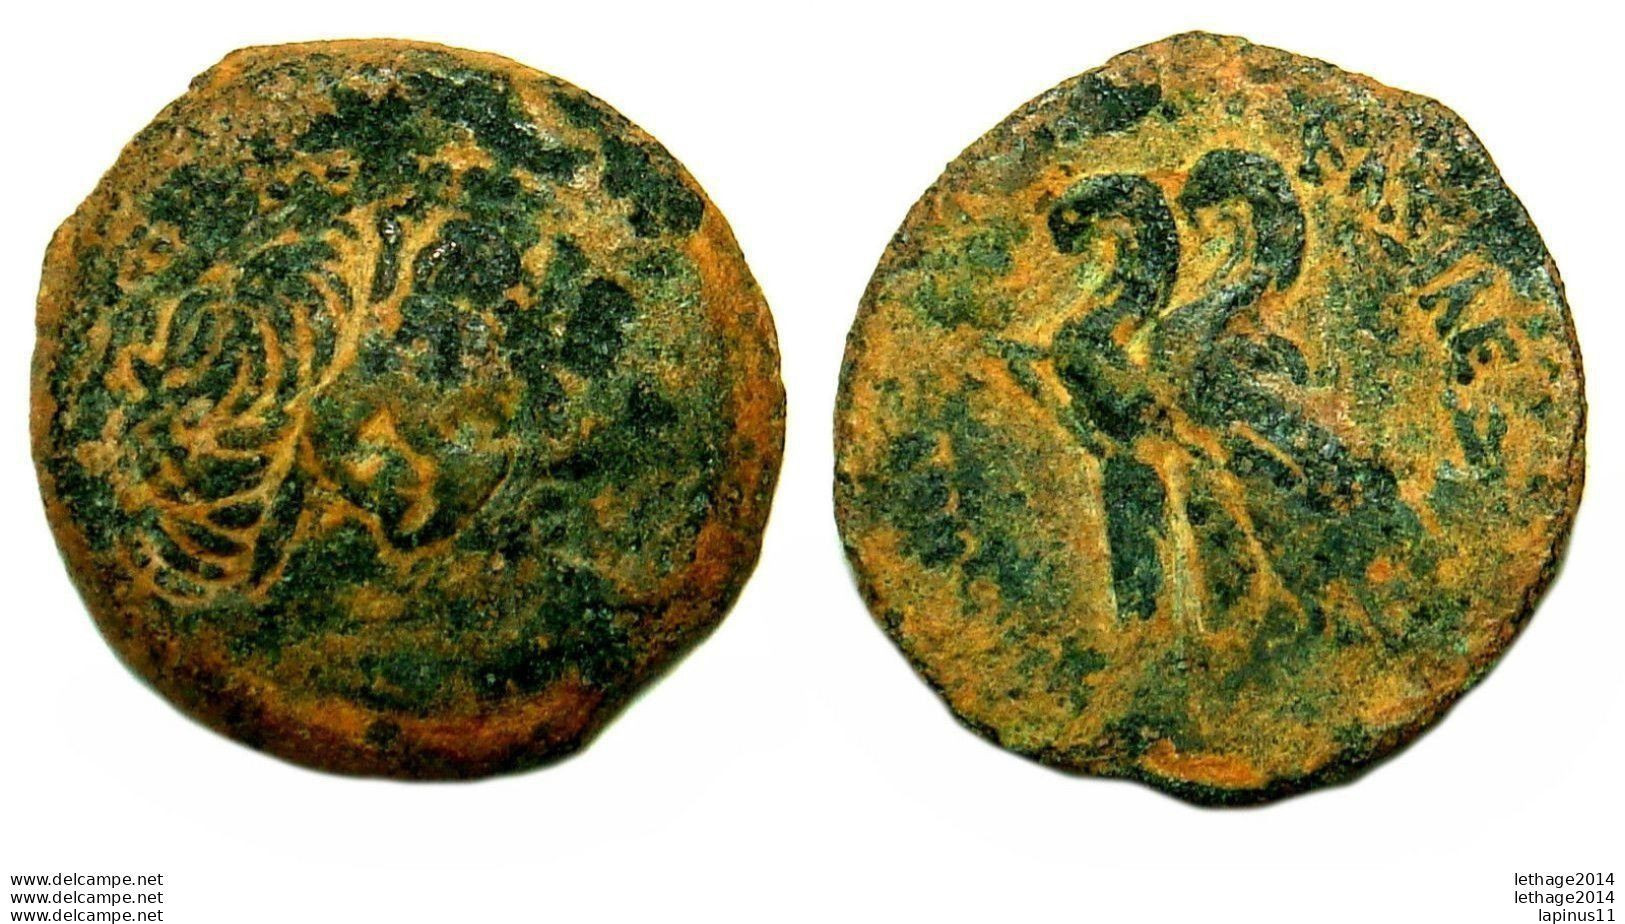 Coin Ptolemy VI Seleucus Alexandria Lebanon Syrie Iraq Kuwait Turkey Persia Persia Pakistan (8 GR, 22 Mm)180 BC/145 BC - Orientale